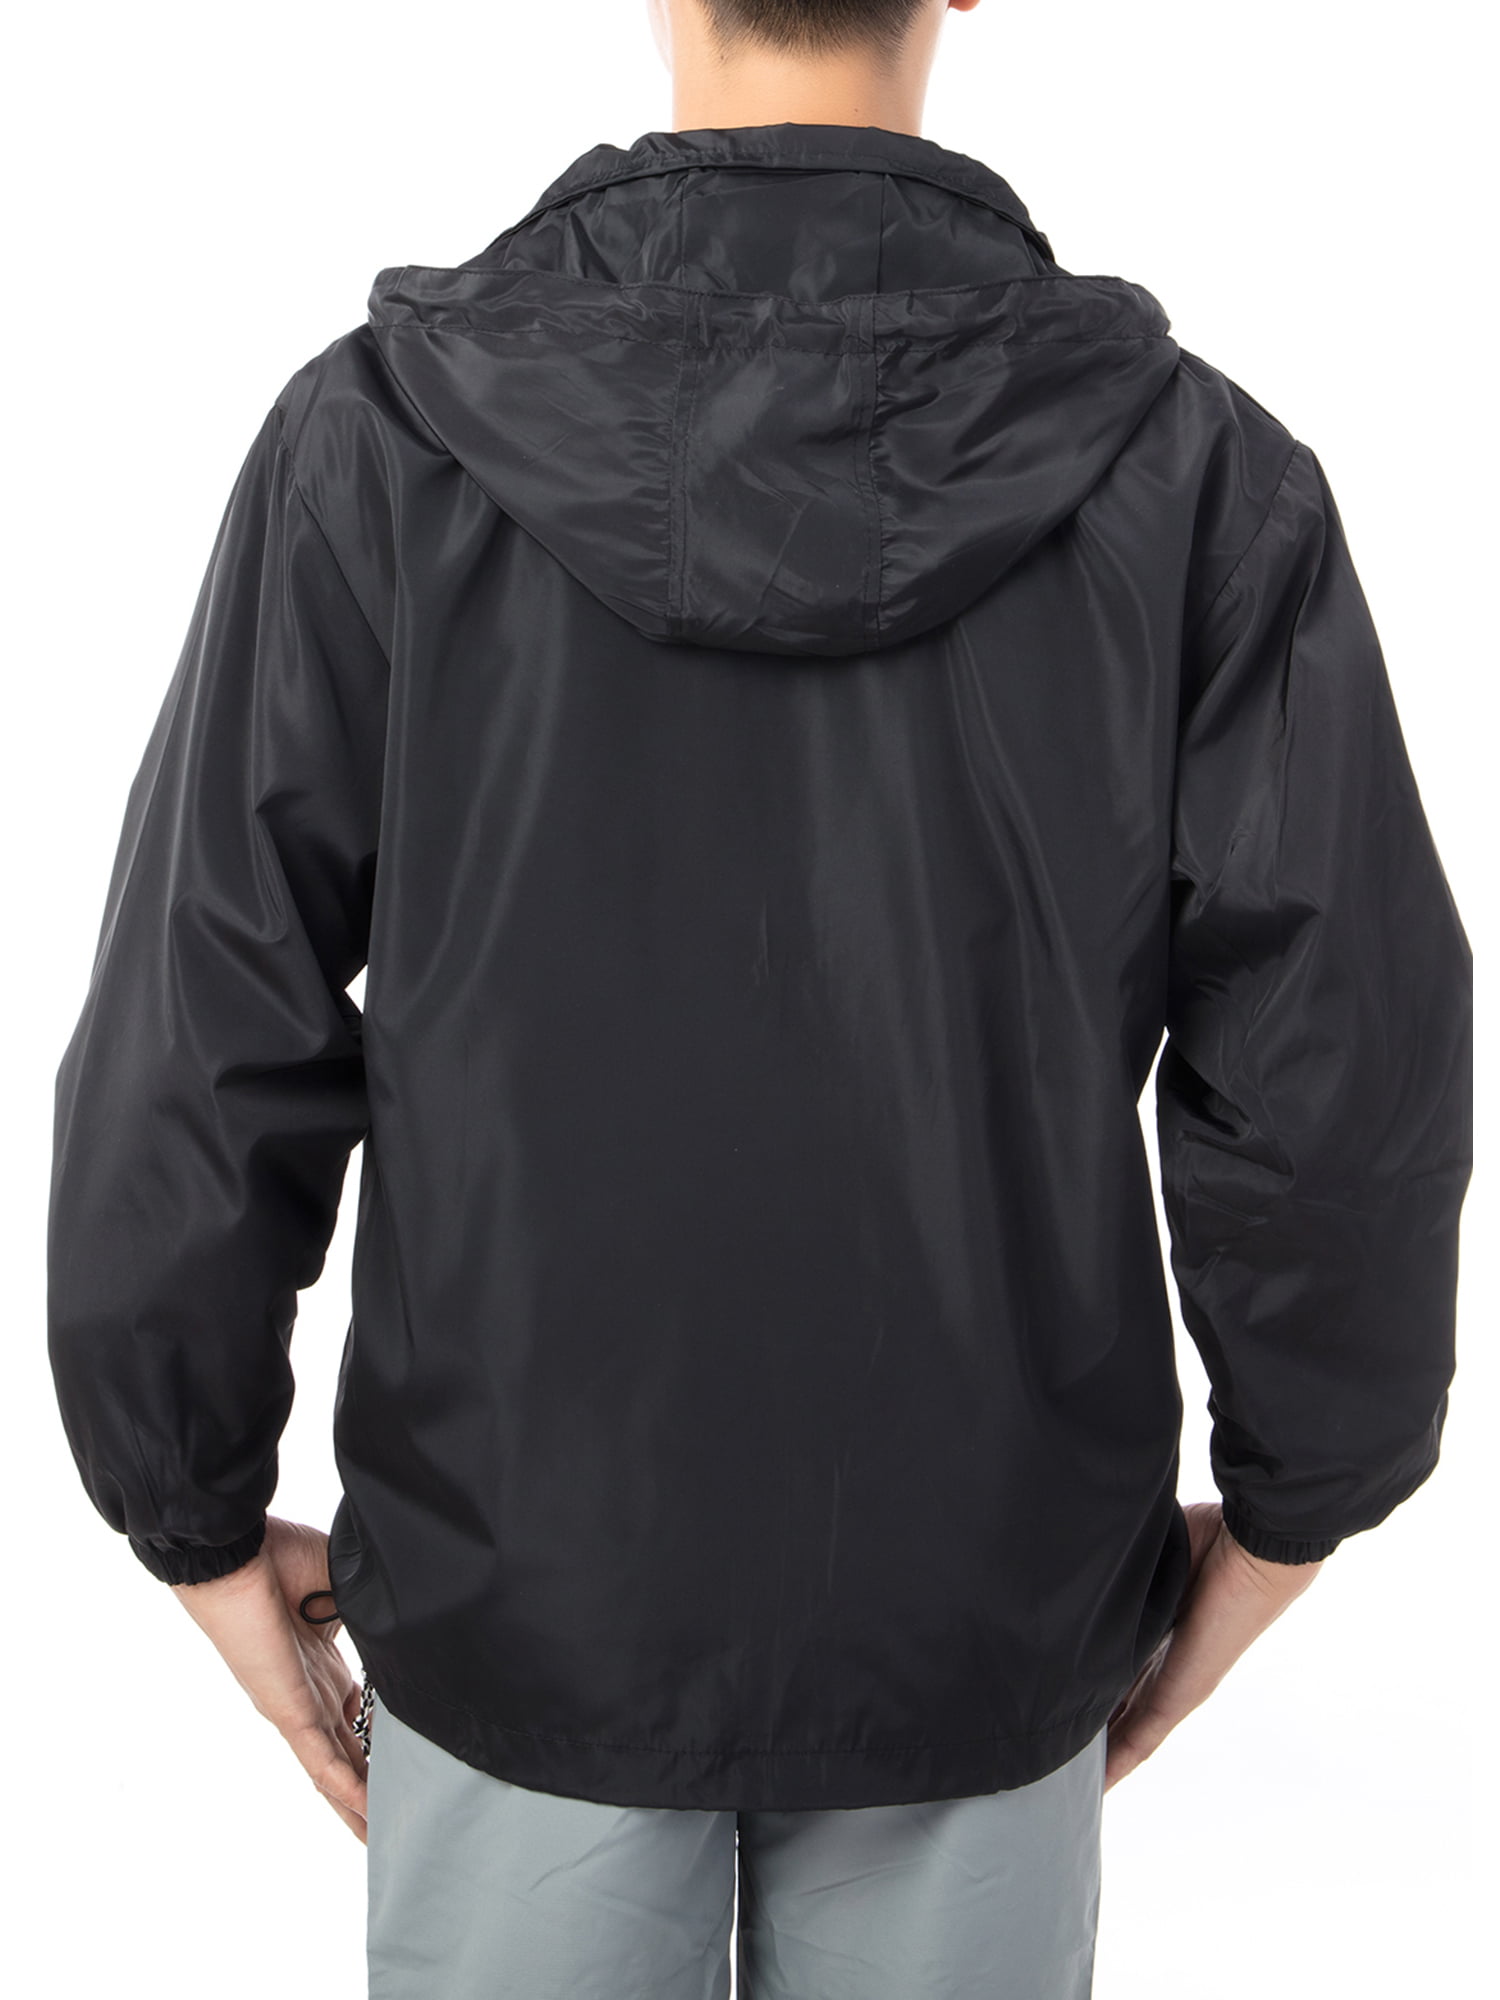 Men's Hooded Windbreaker Full Zip Pockets Lightweight Water-Resistant